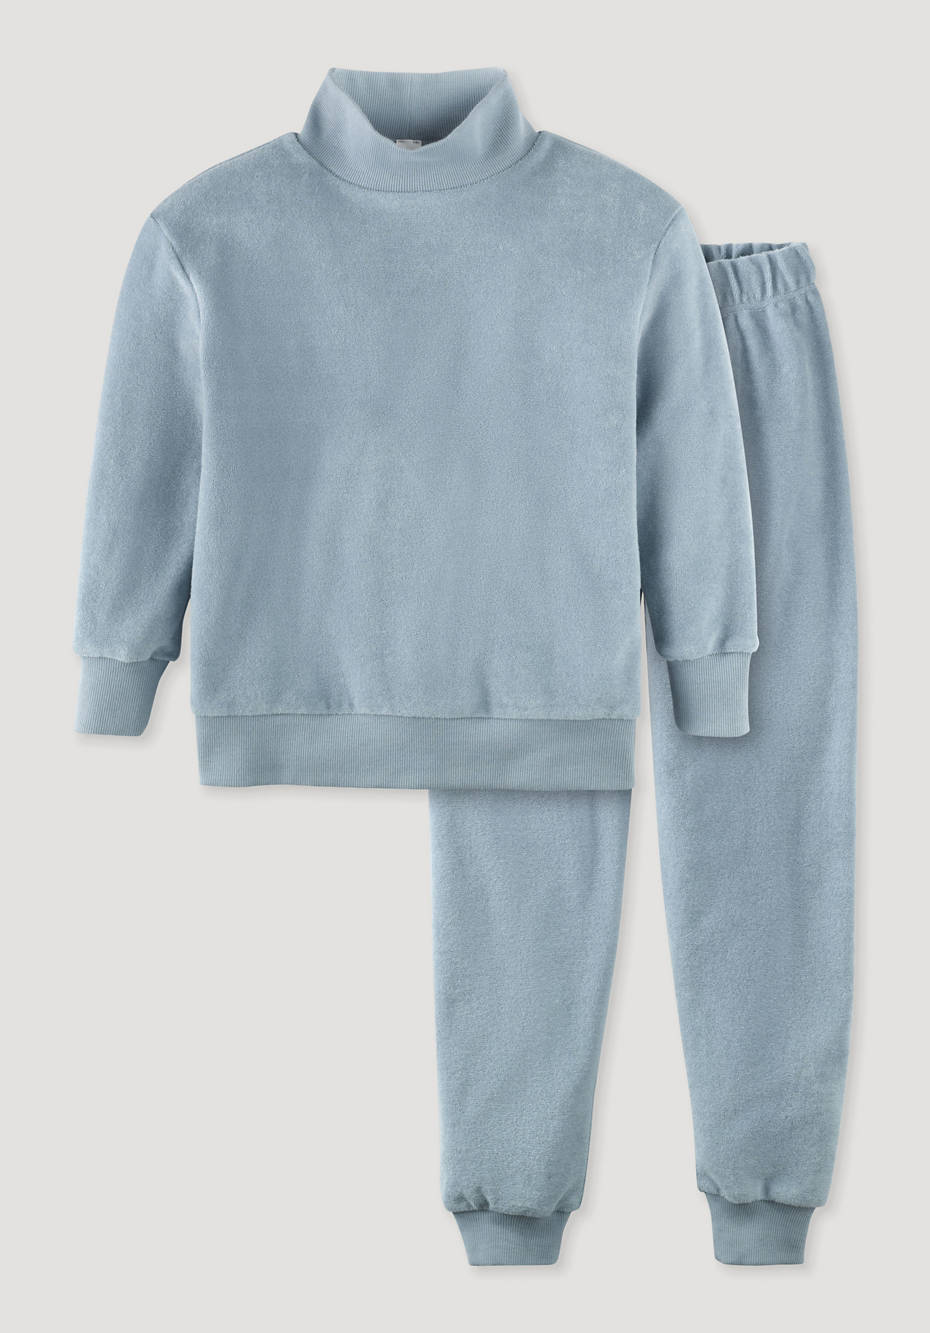 Terrycloth pajamas made from pure organic cotton